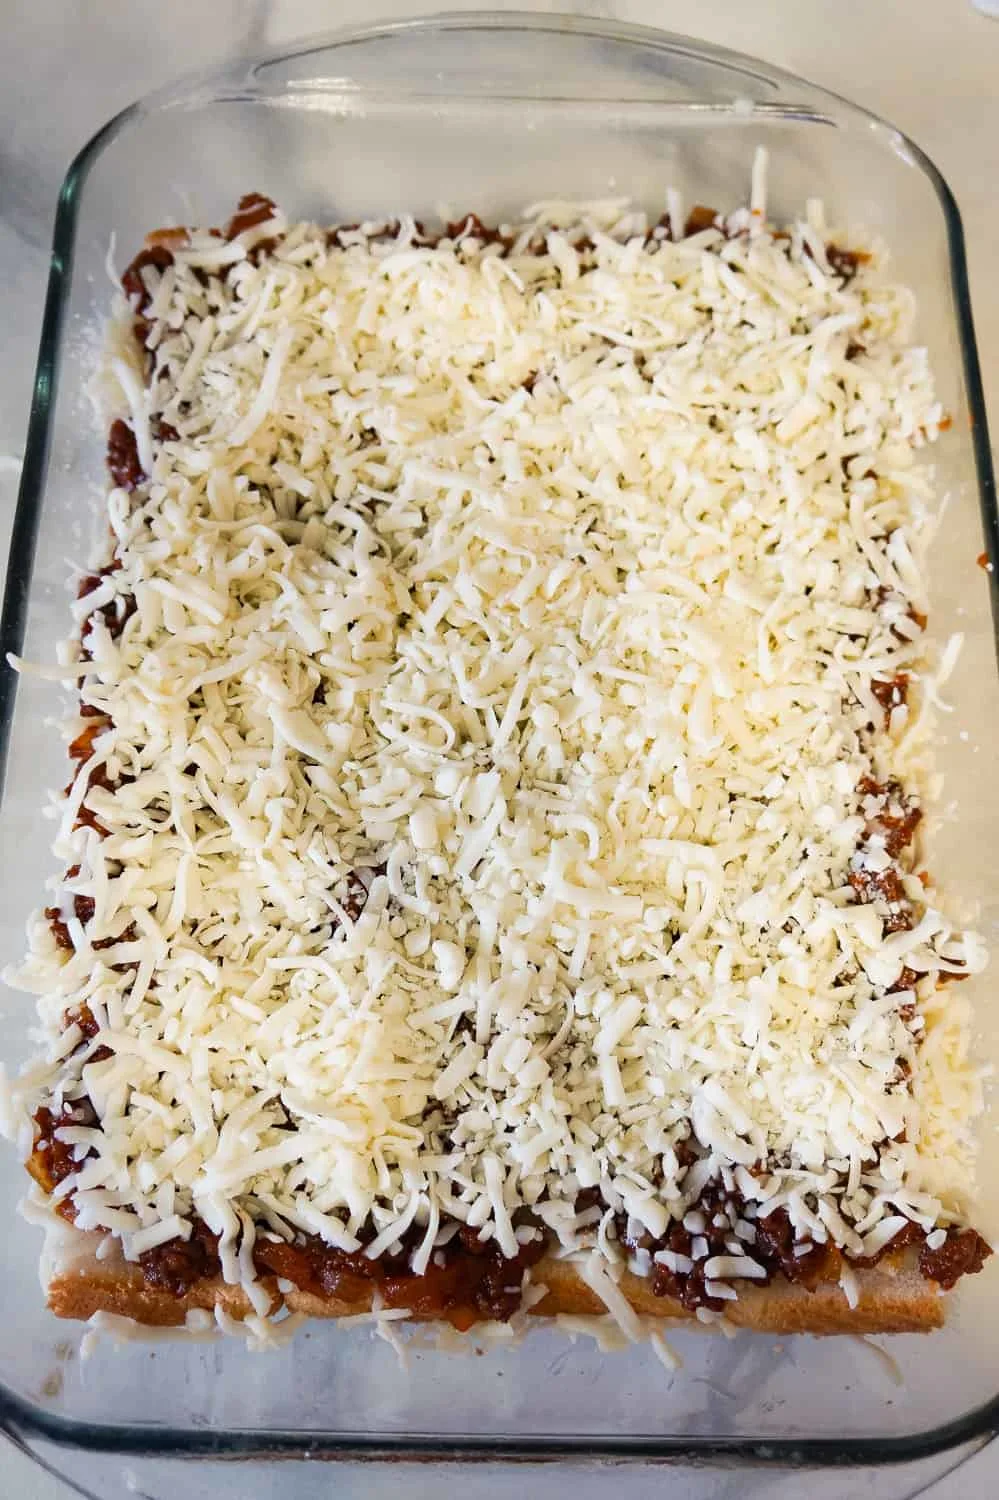 shredded mozzarella cheese on top of sloppy joe mixture in a baking dish